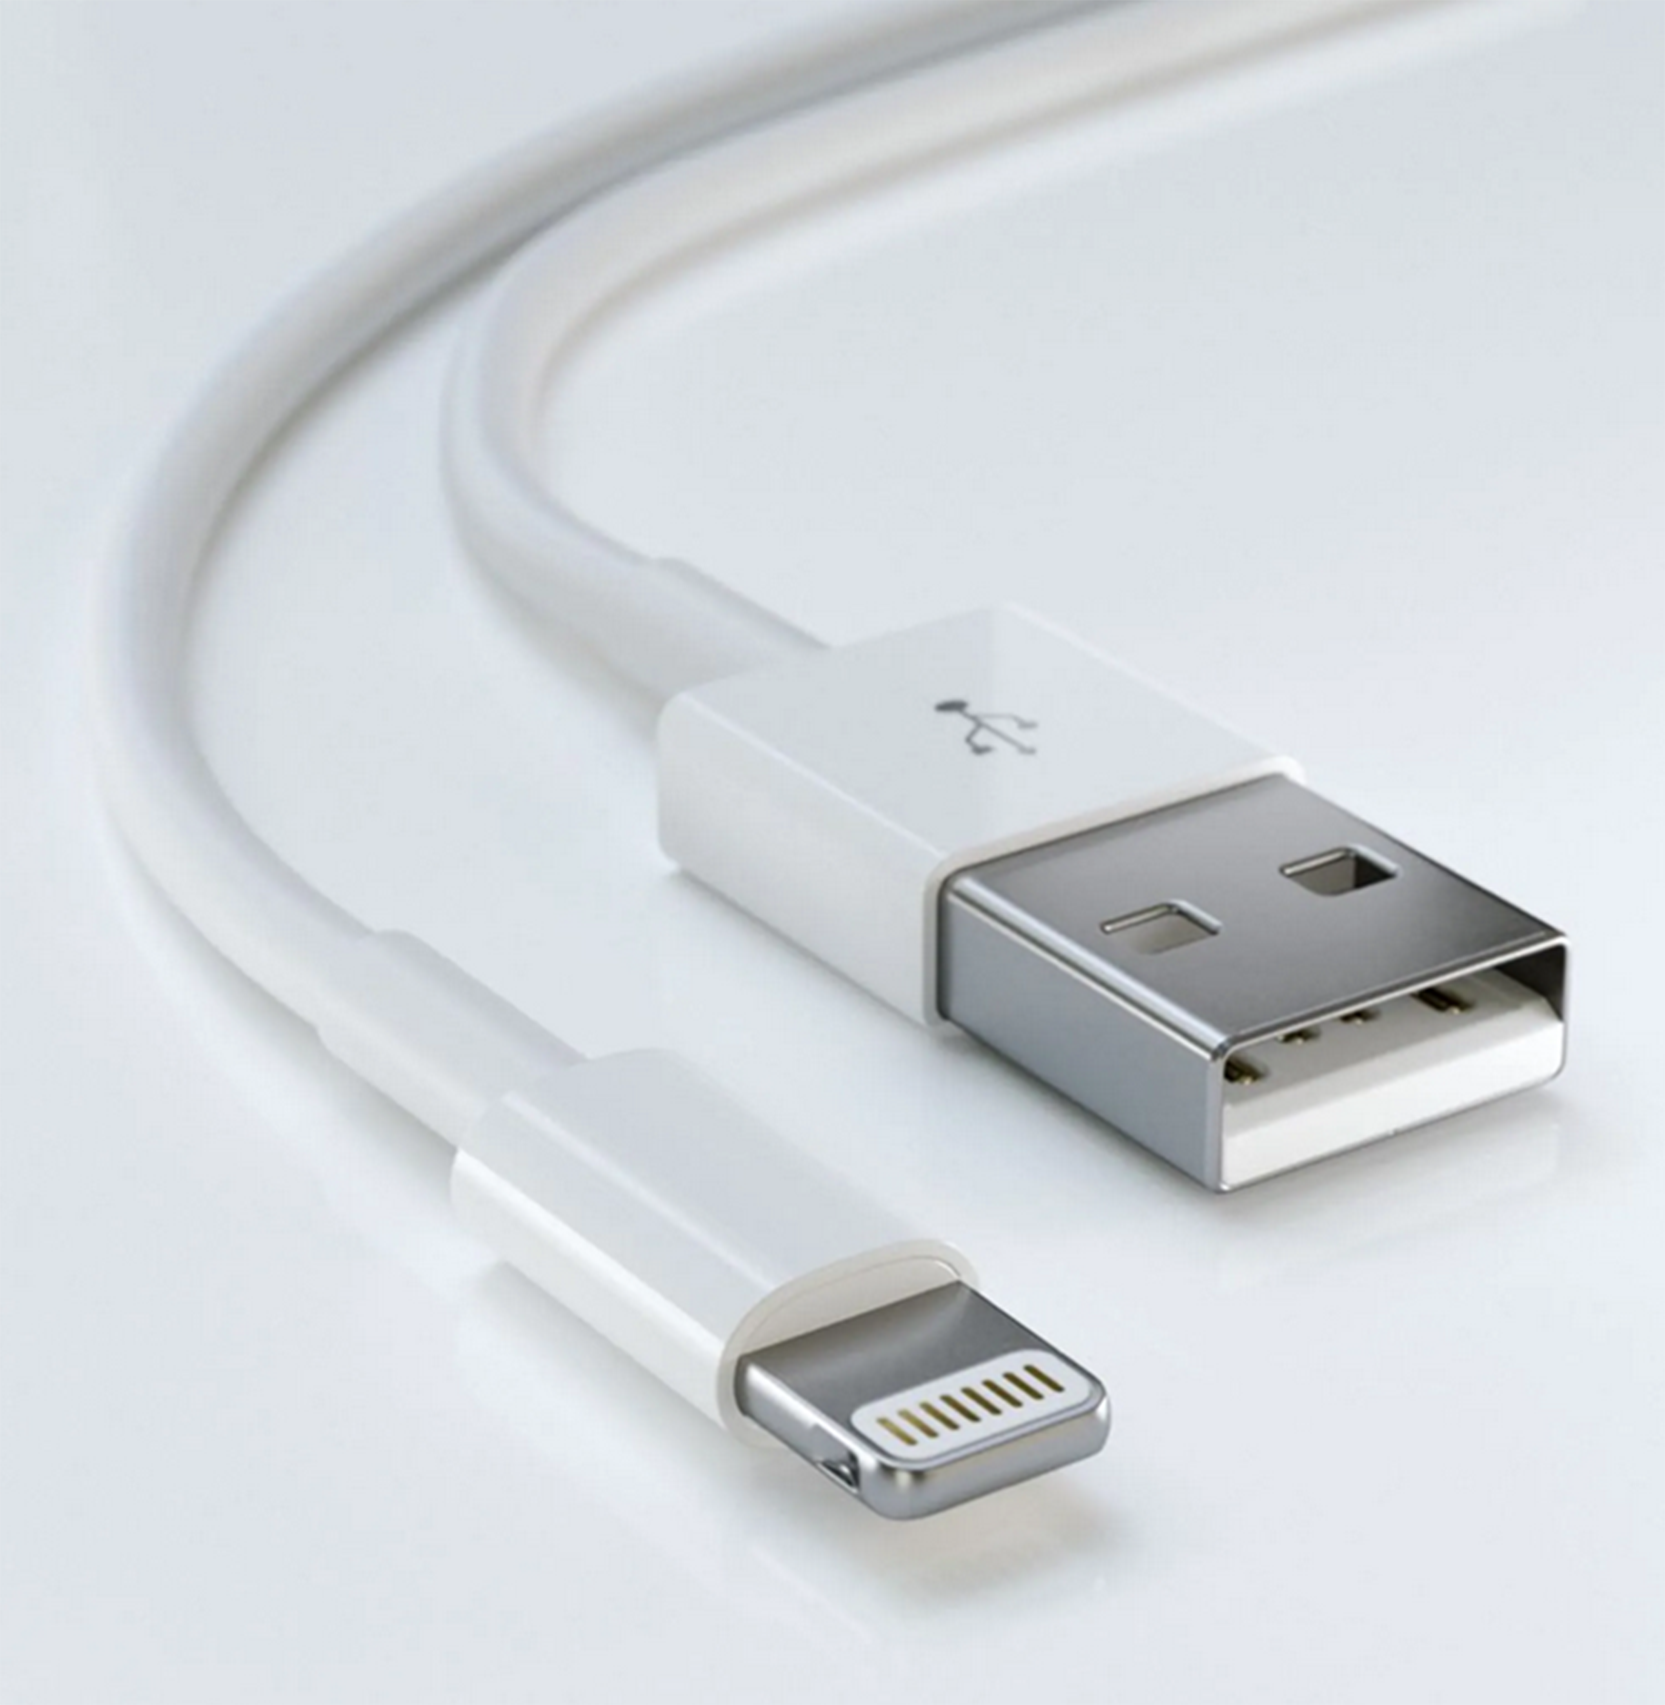 6x iPhone 6 Lightning auf USB Kabel 2m Ladekabel